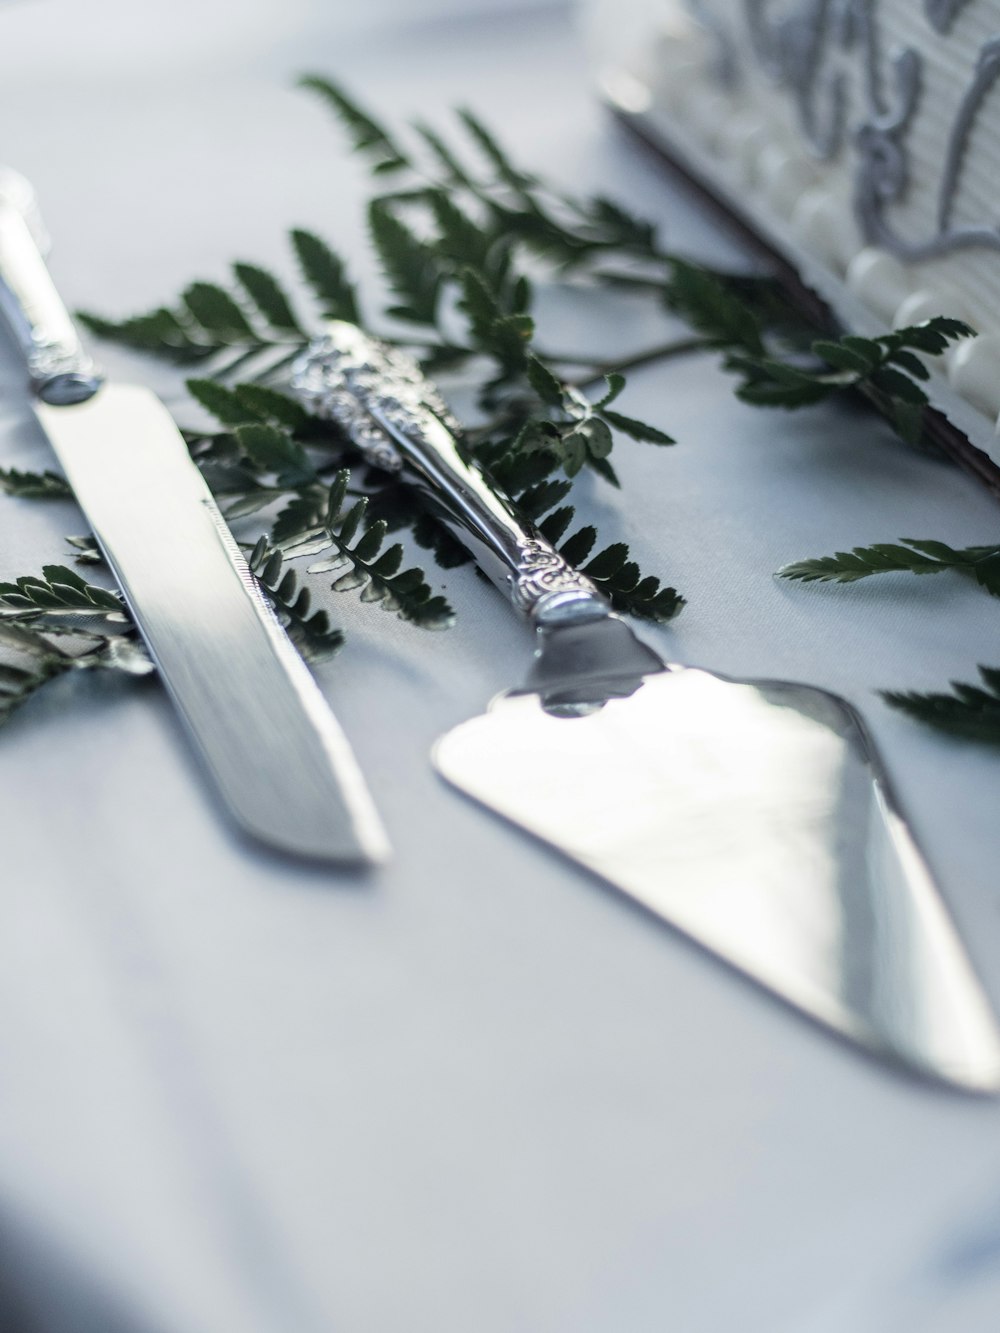 silver bread knife on green leaves